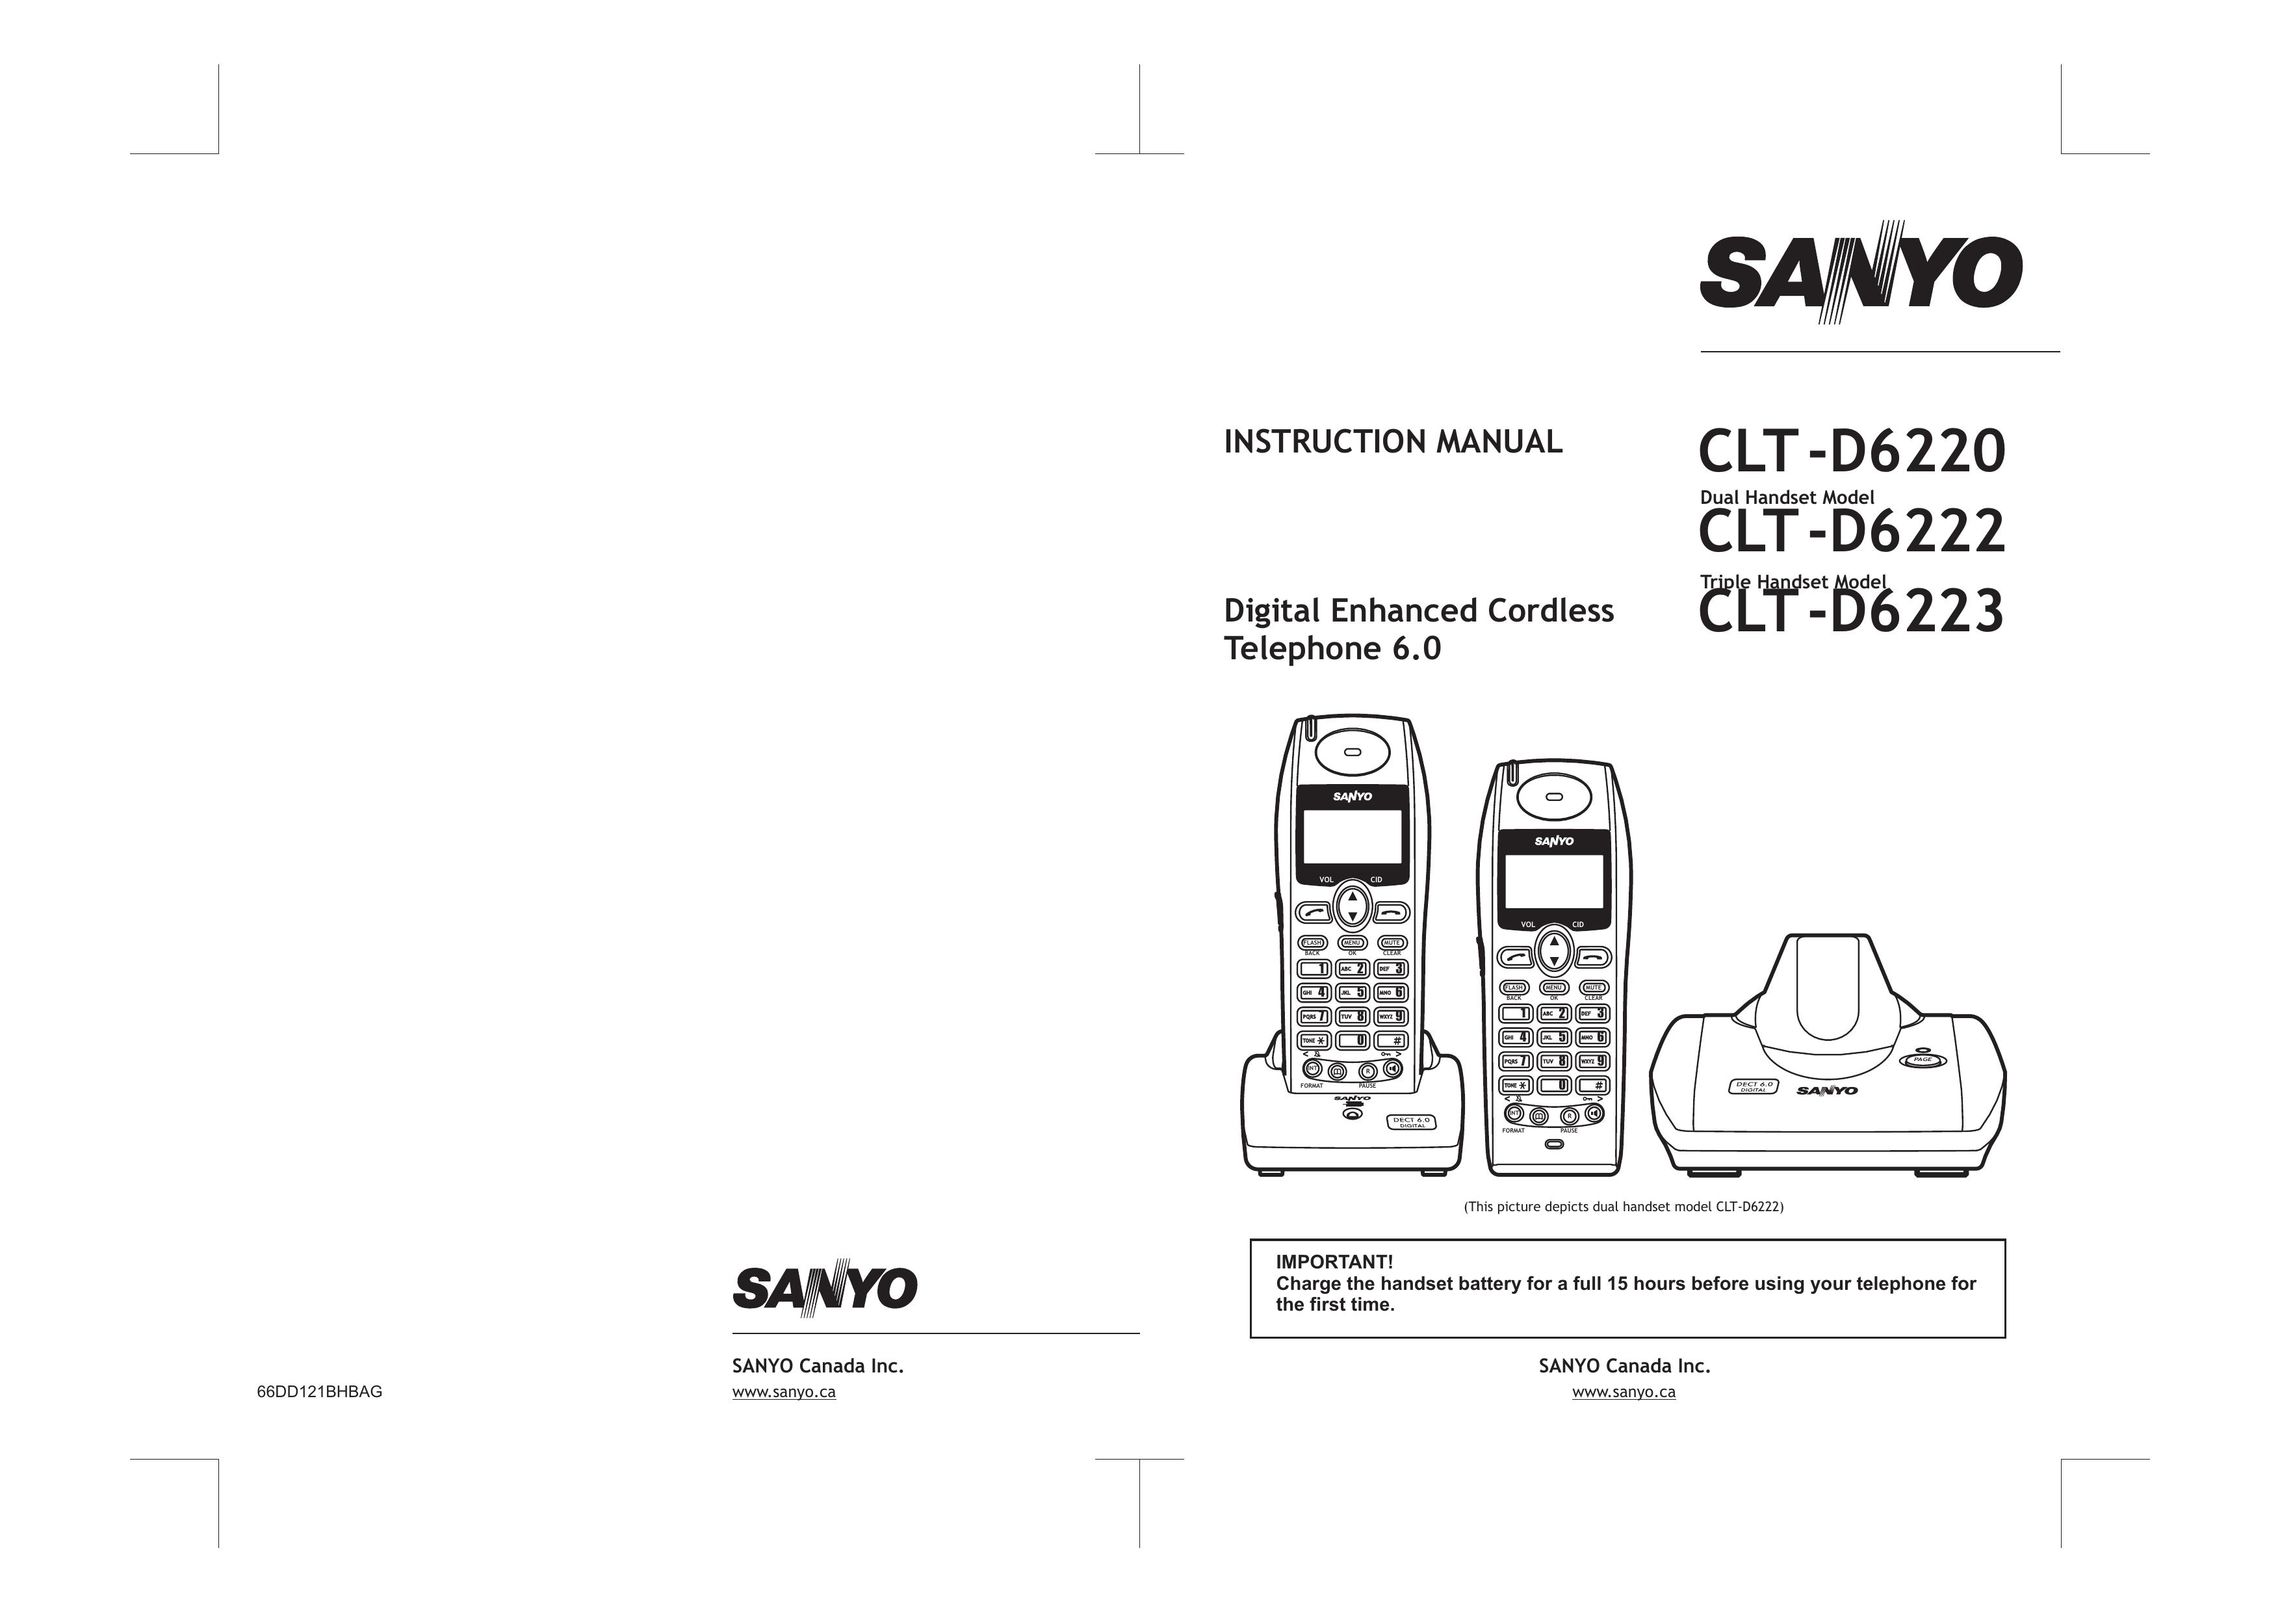 Sanyo CLT-D6222 Cordless Telephone User Manual